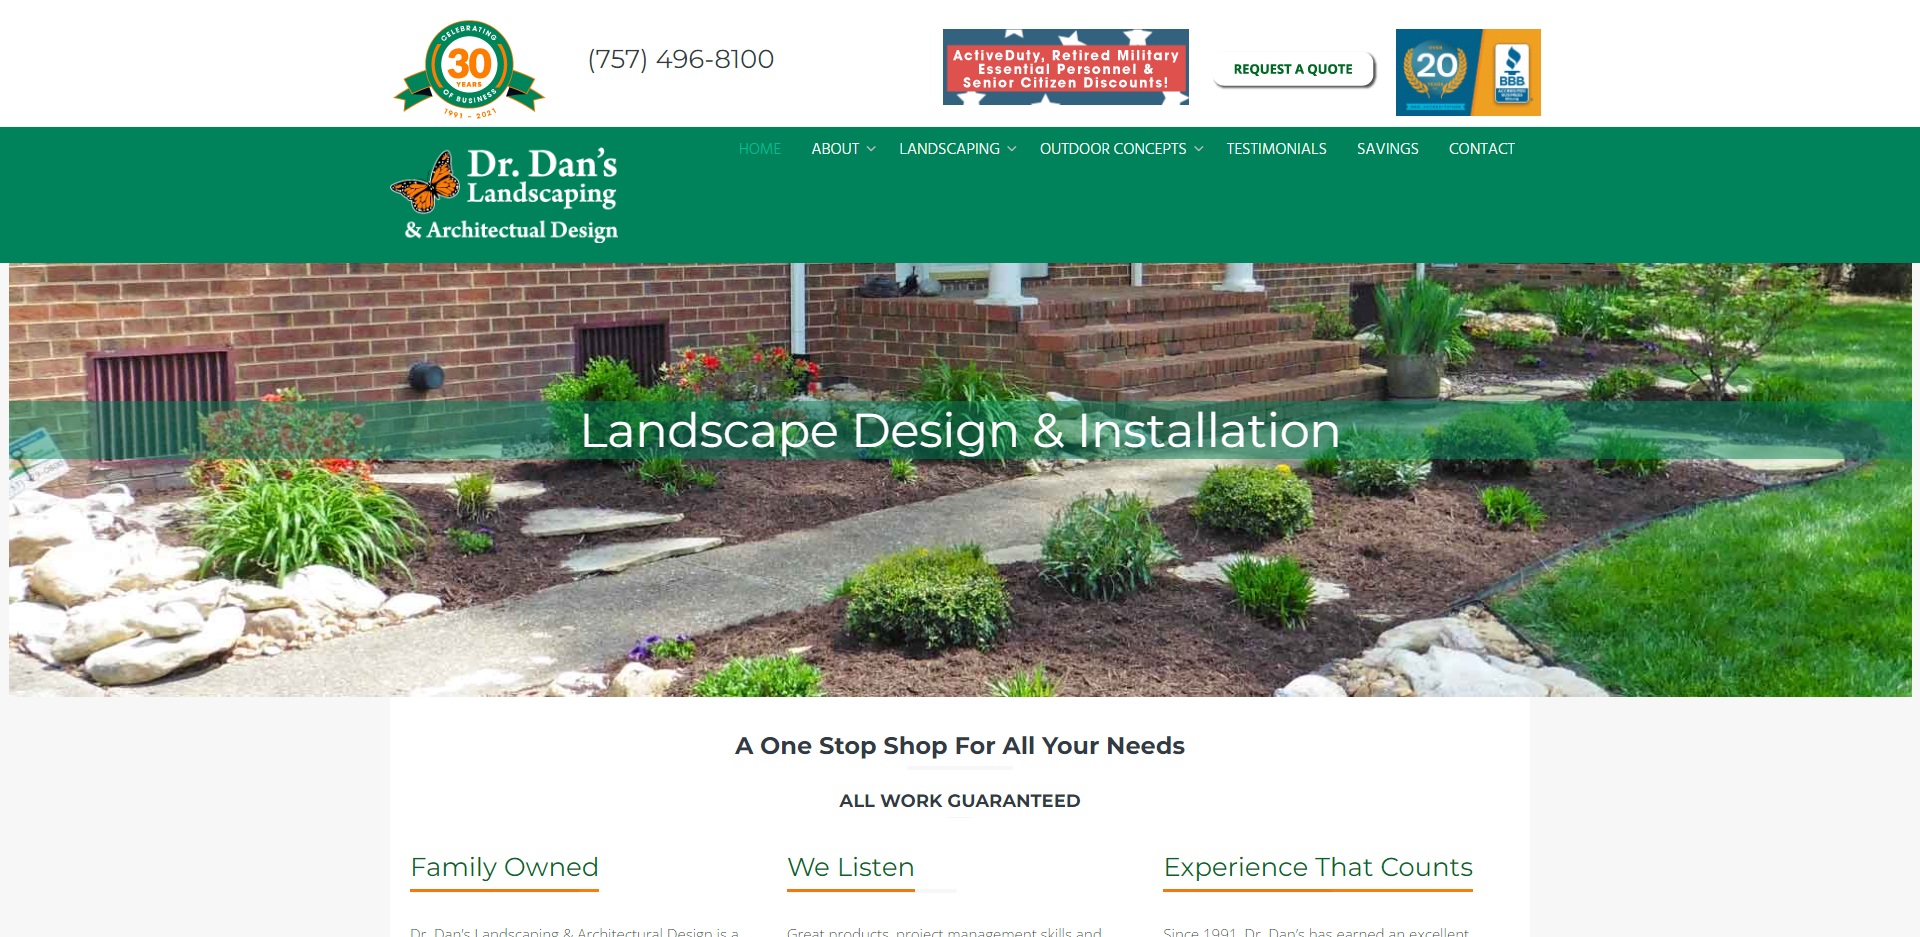 The Best Landscaping Companies in Virginia Beach, VA